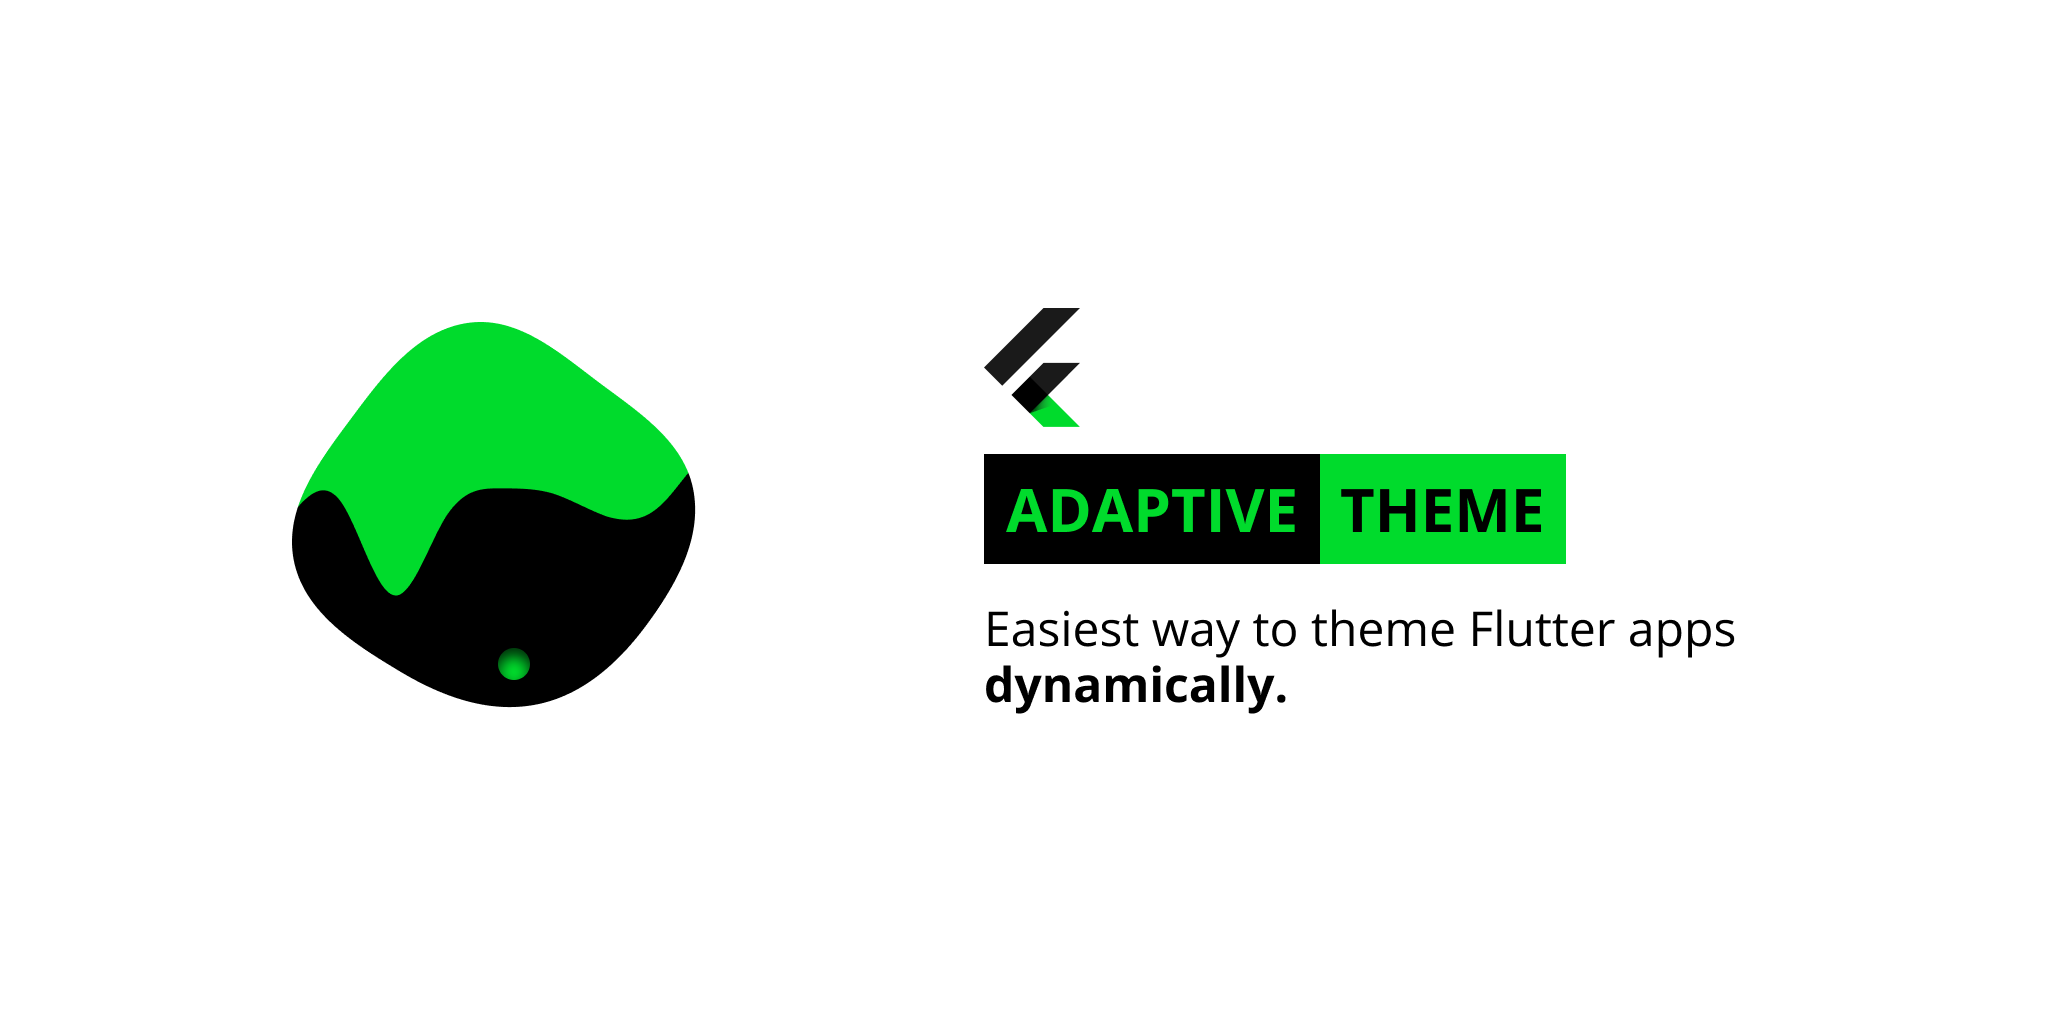 Adaptive Theme on Flutter